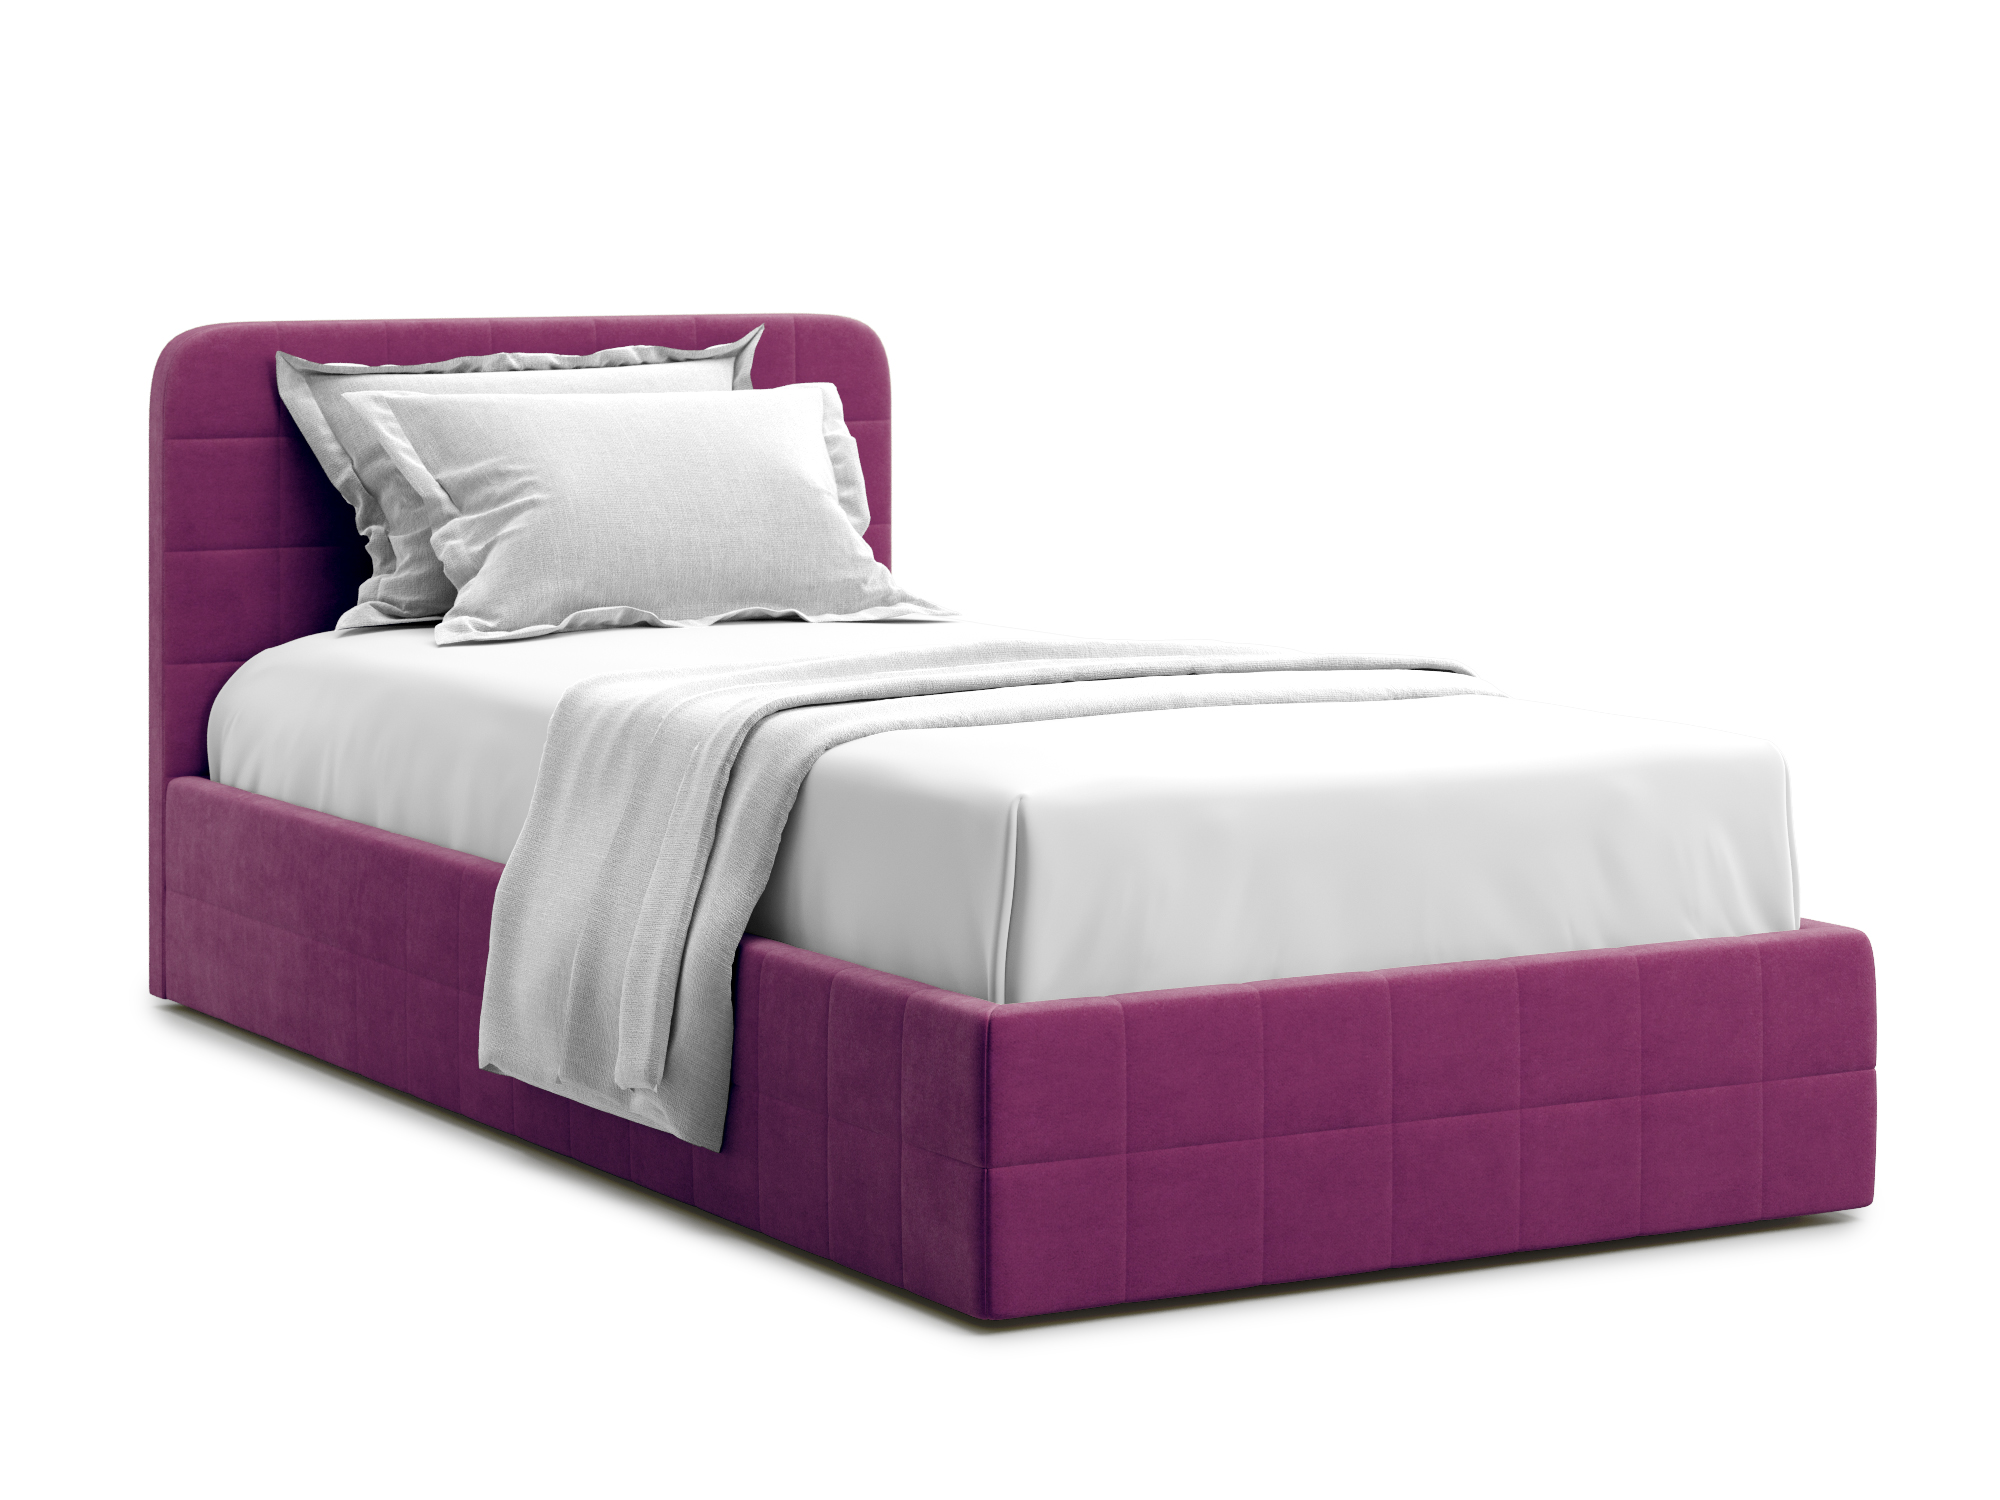 Кровать Adda 120 Velutto 15 Фиолетовый, Массив, ДСП кровать adda 120 velutto 23 шоколадный массив дсп